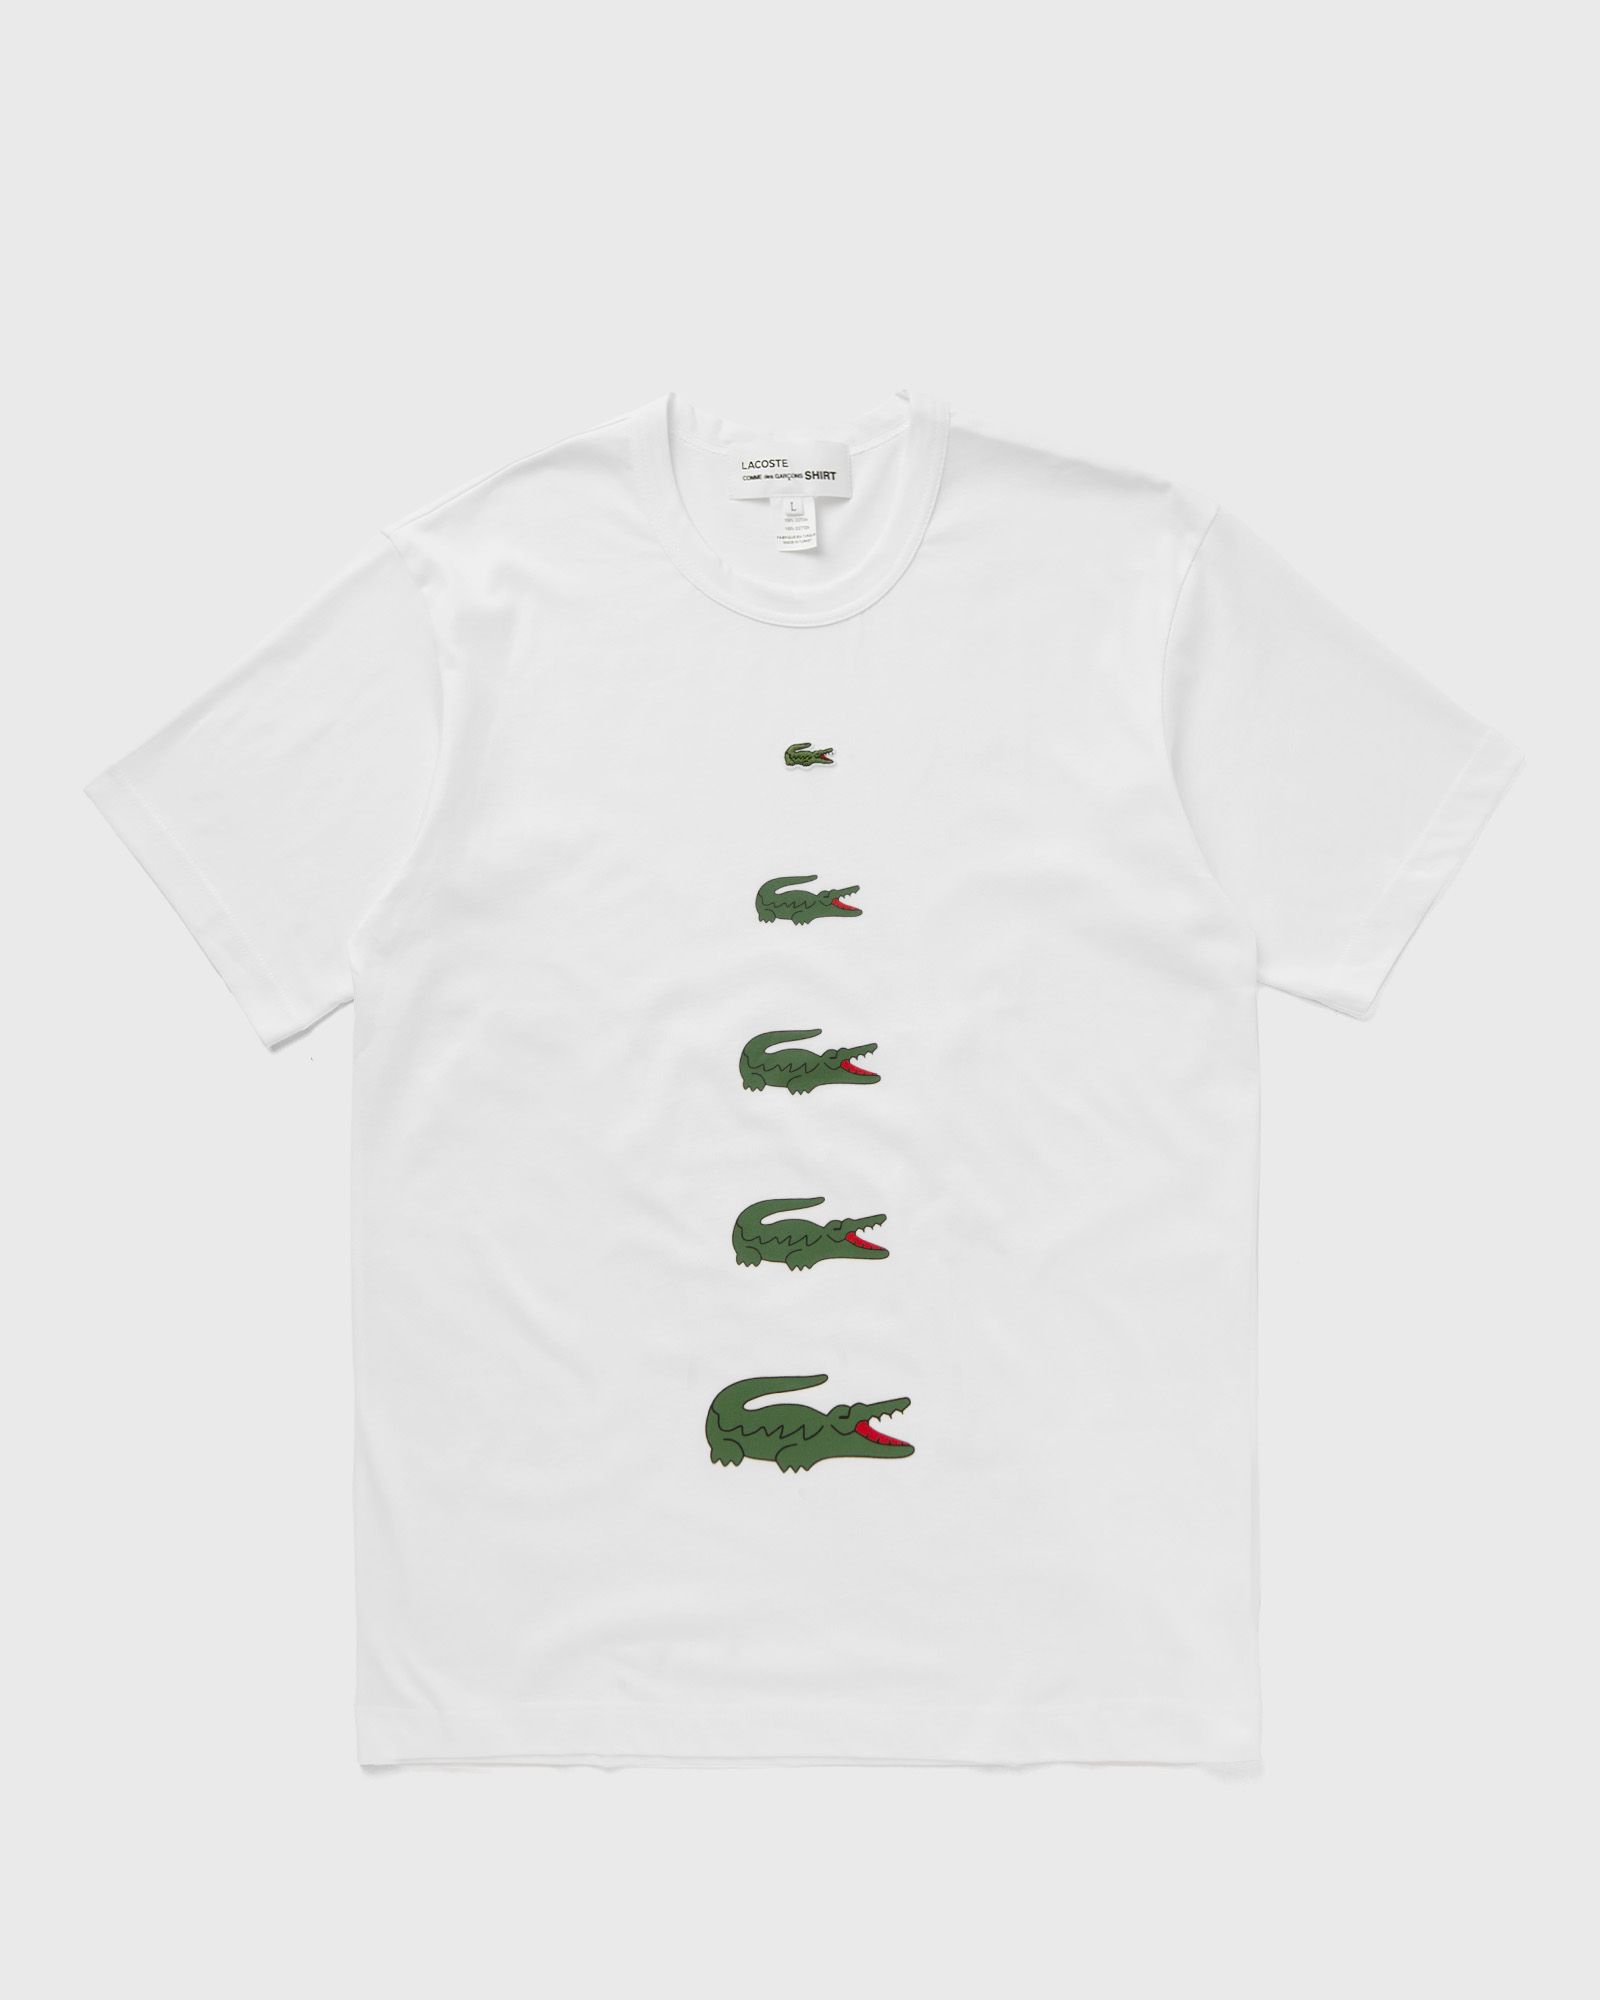 Comme des Garçons Shirt - x lacoste knit tee men shortsleeves green|white in größe:xl